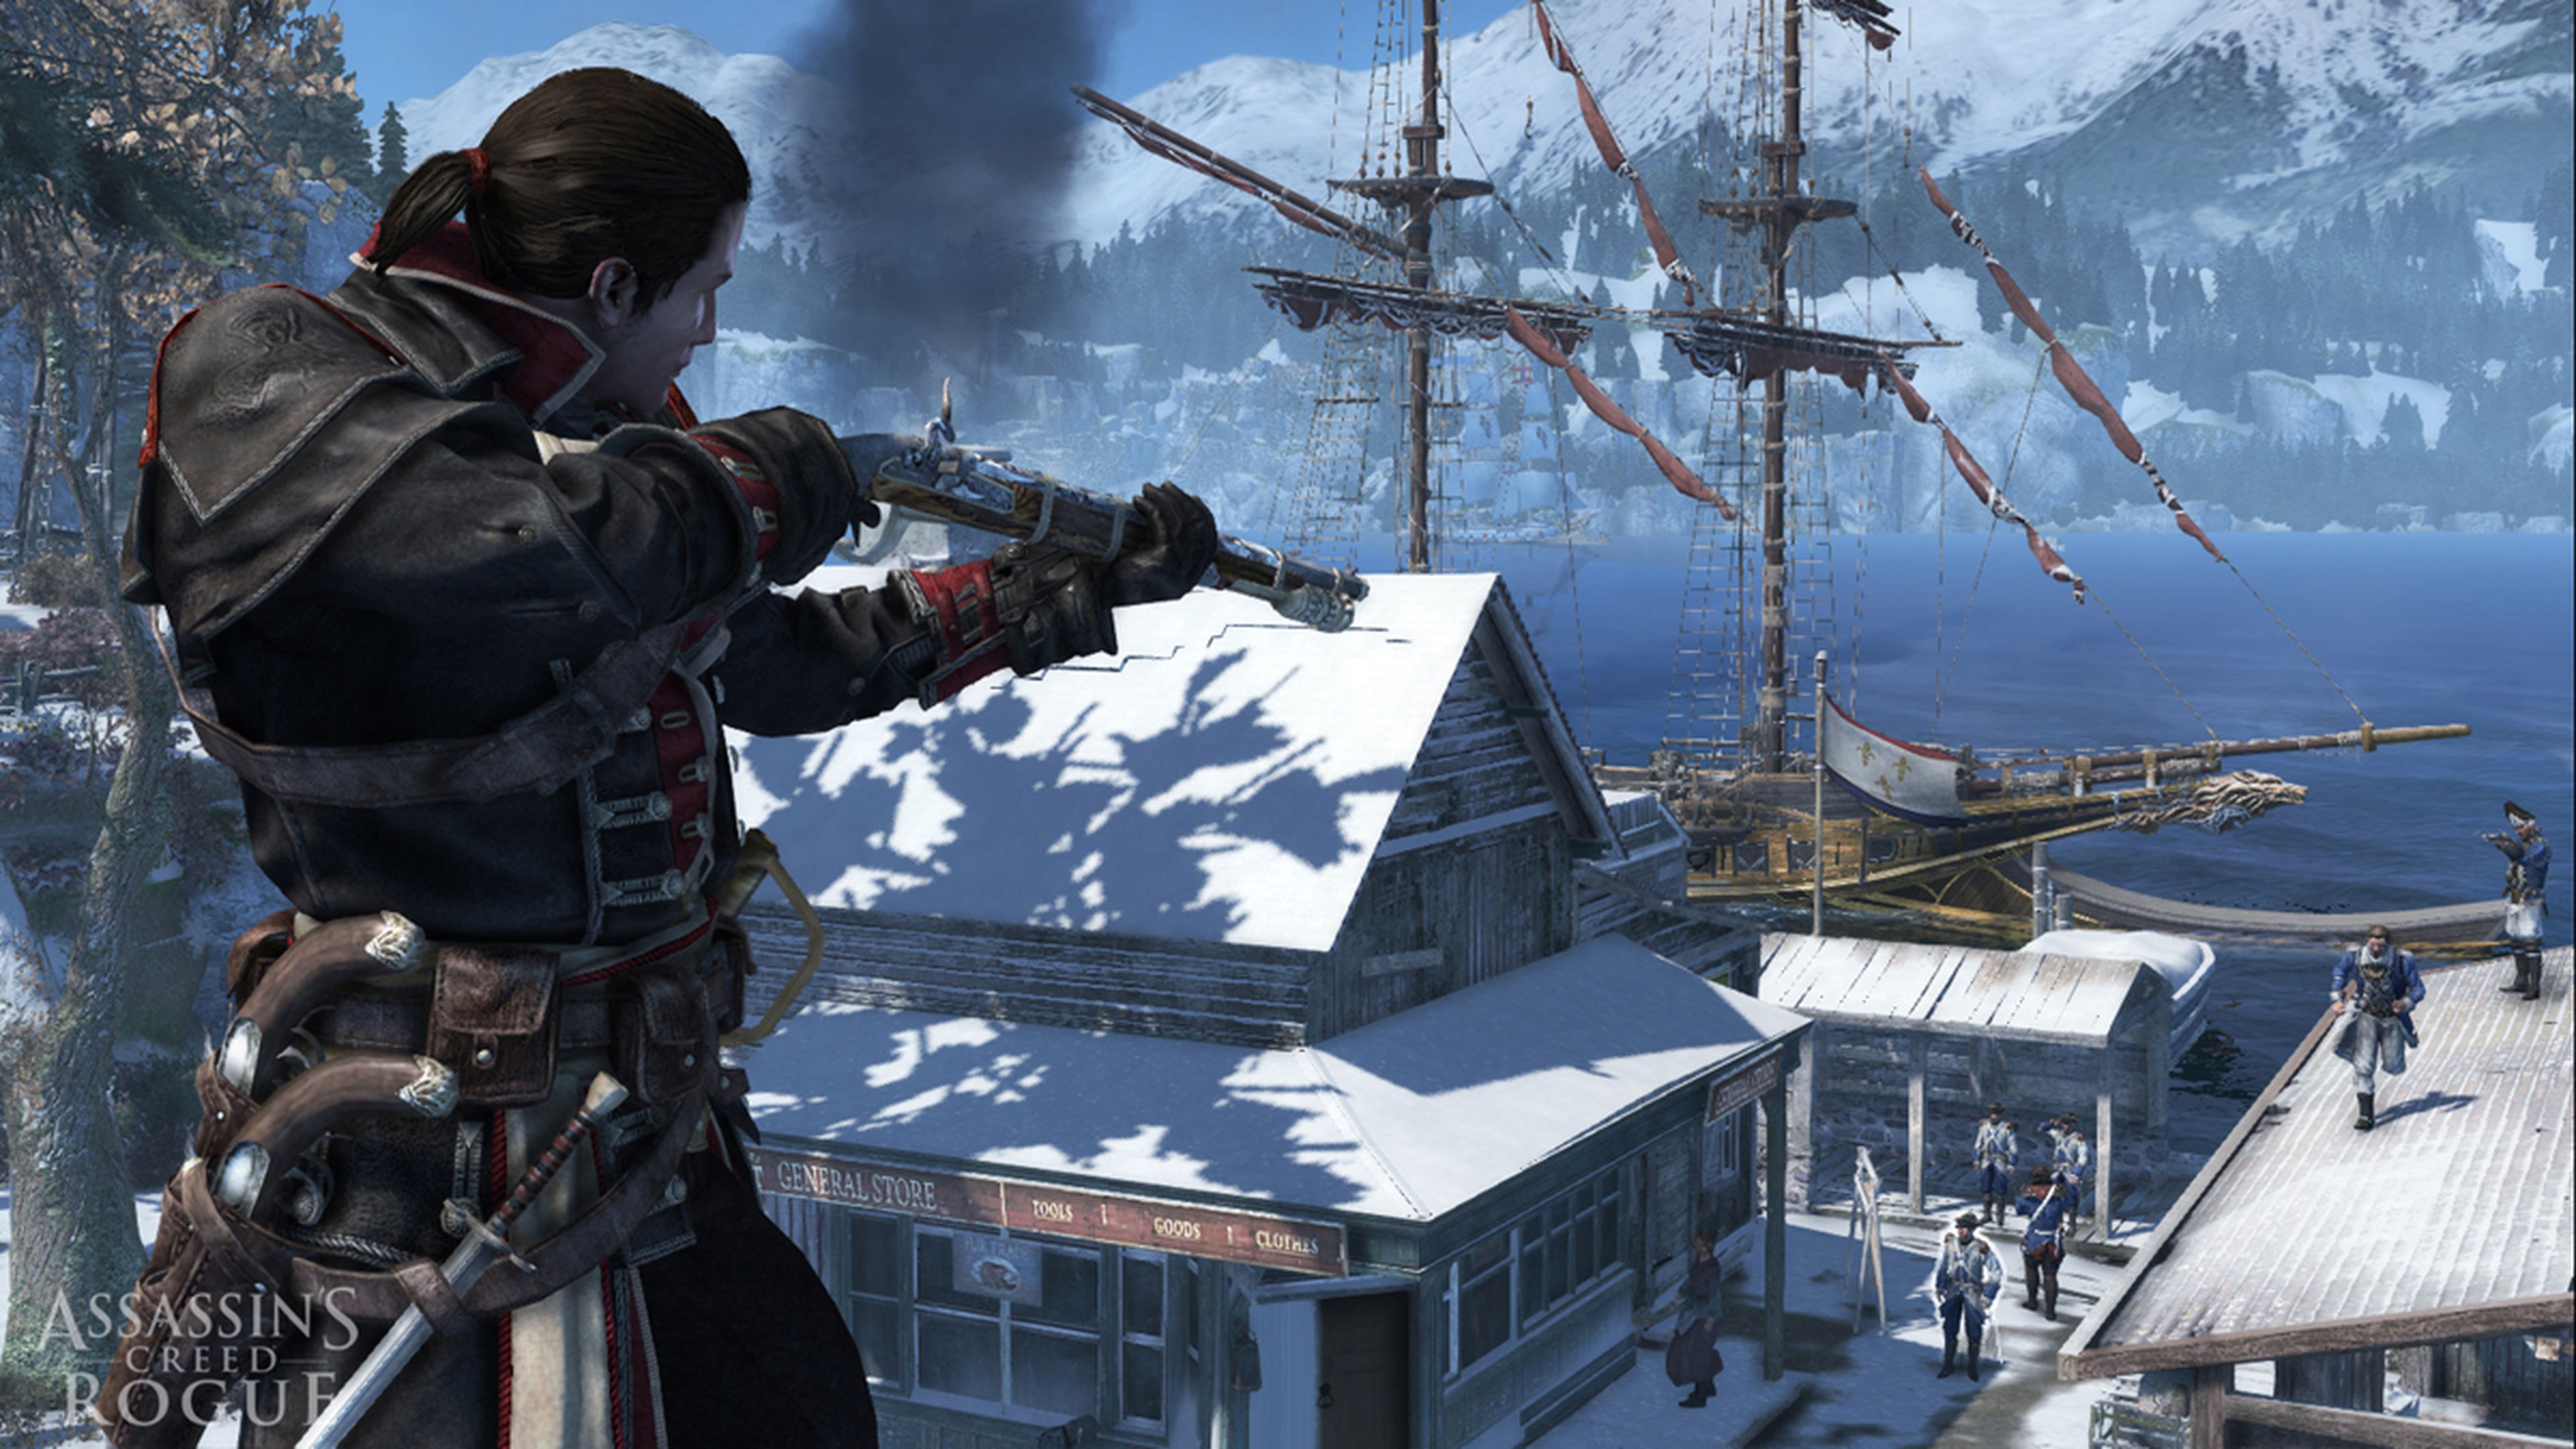 Avance: Ya hemos jugado a Assassin's Creed Rogue